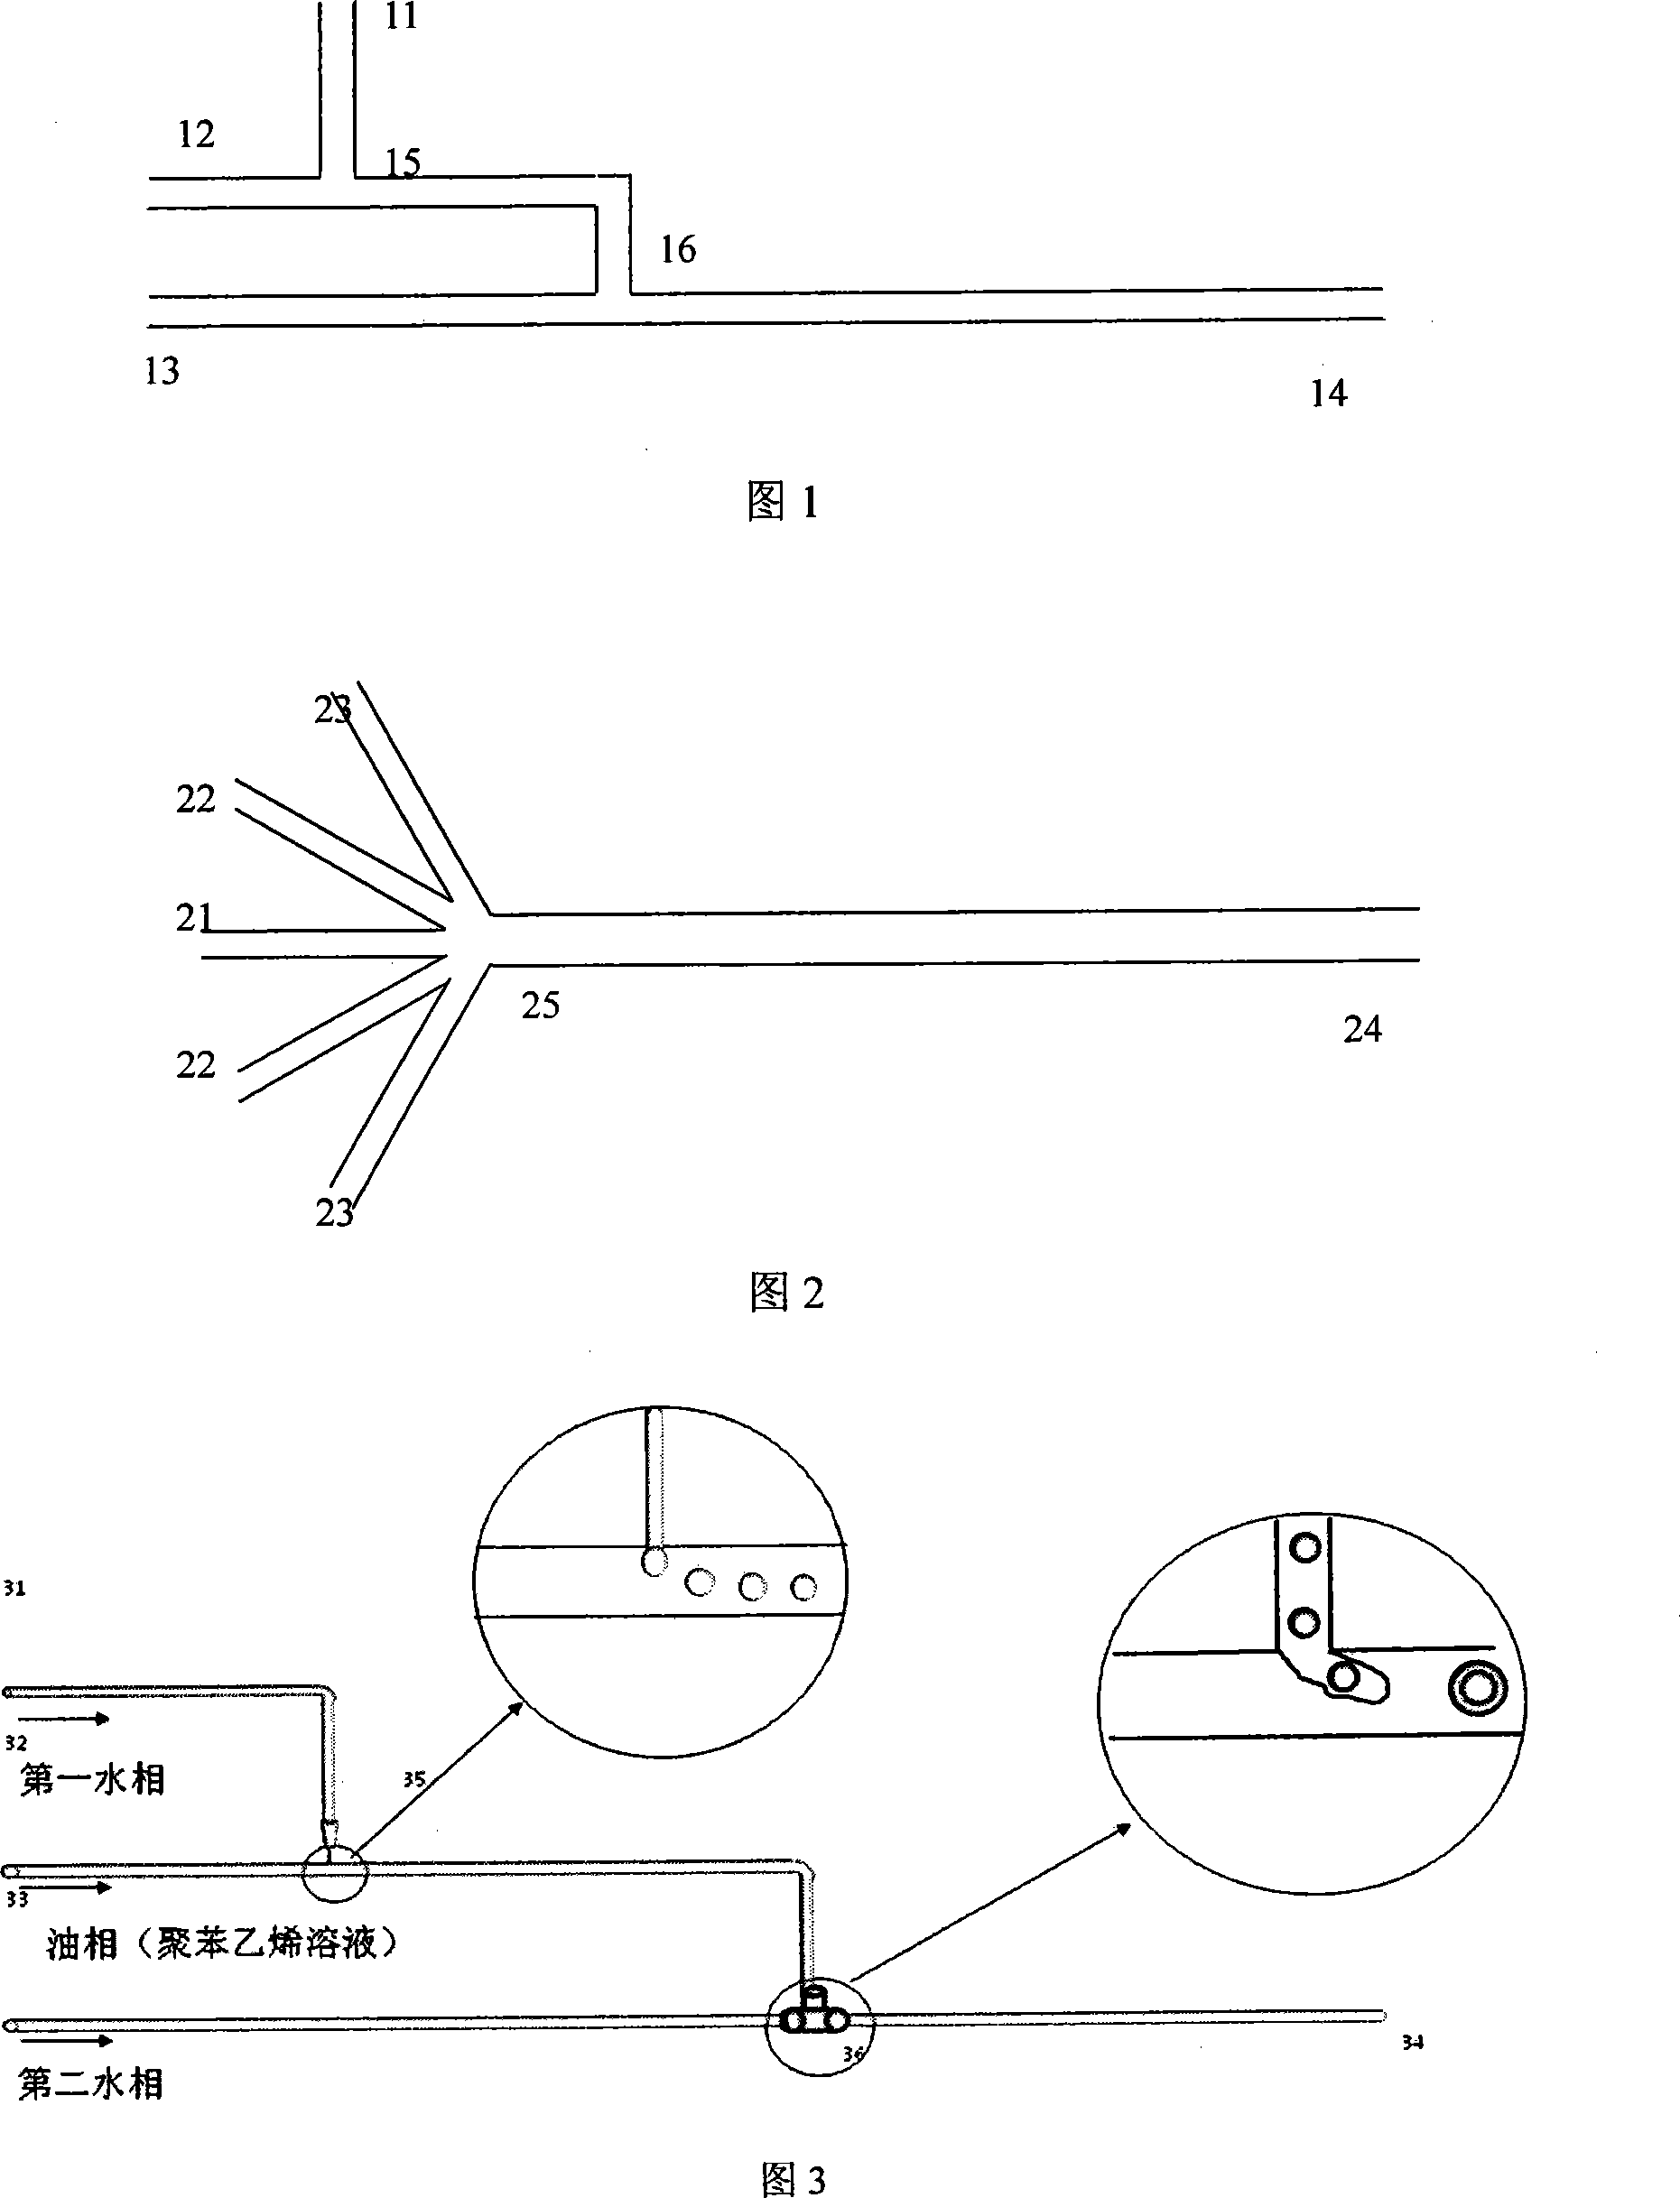 Method for preparing fusion pallet based on micro-fluid